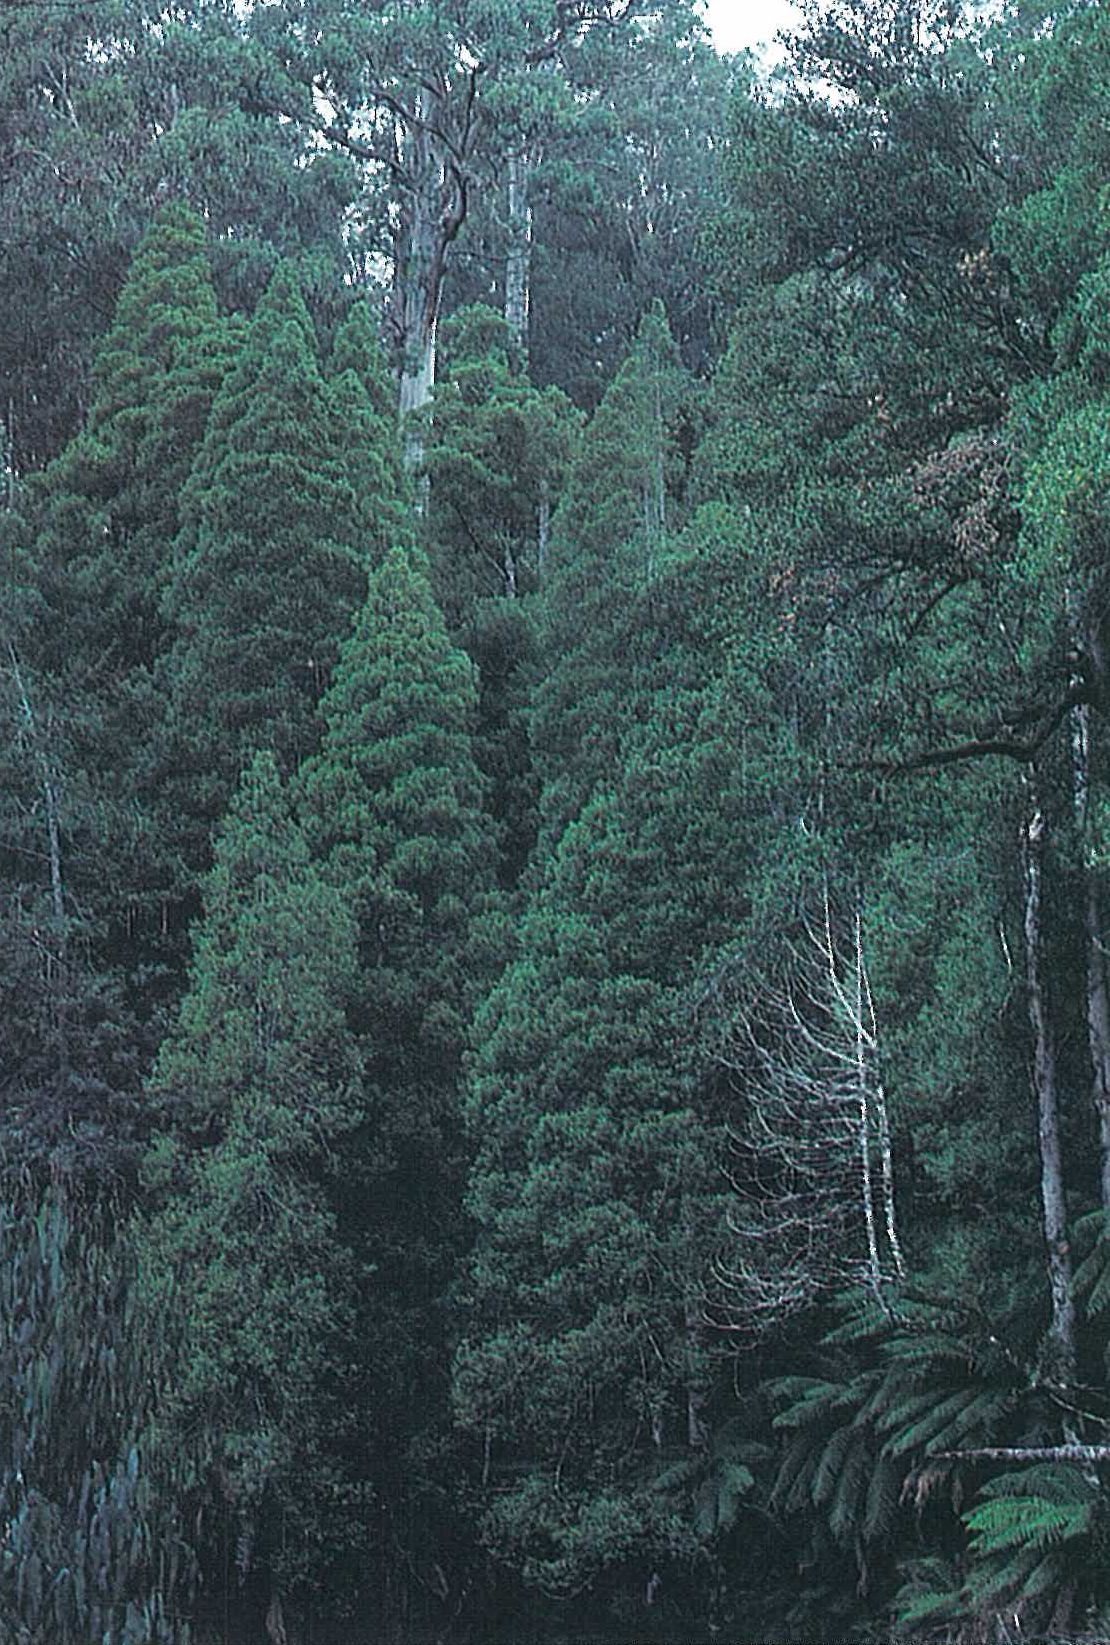 East Gippsland; cool temparate rainforest. Characteristic conical trees of Atherospermum moschatum, with Dicksonia antarctica and Elaeocarpus holopetalus. Eucalyptus denticulata emergent. Errinundra plateau.